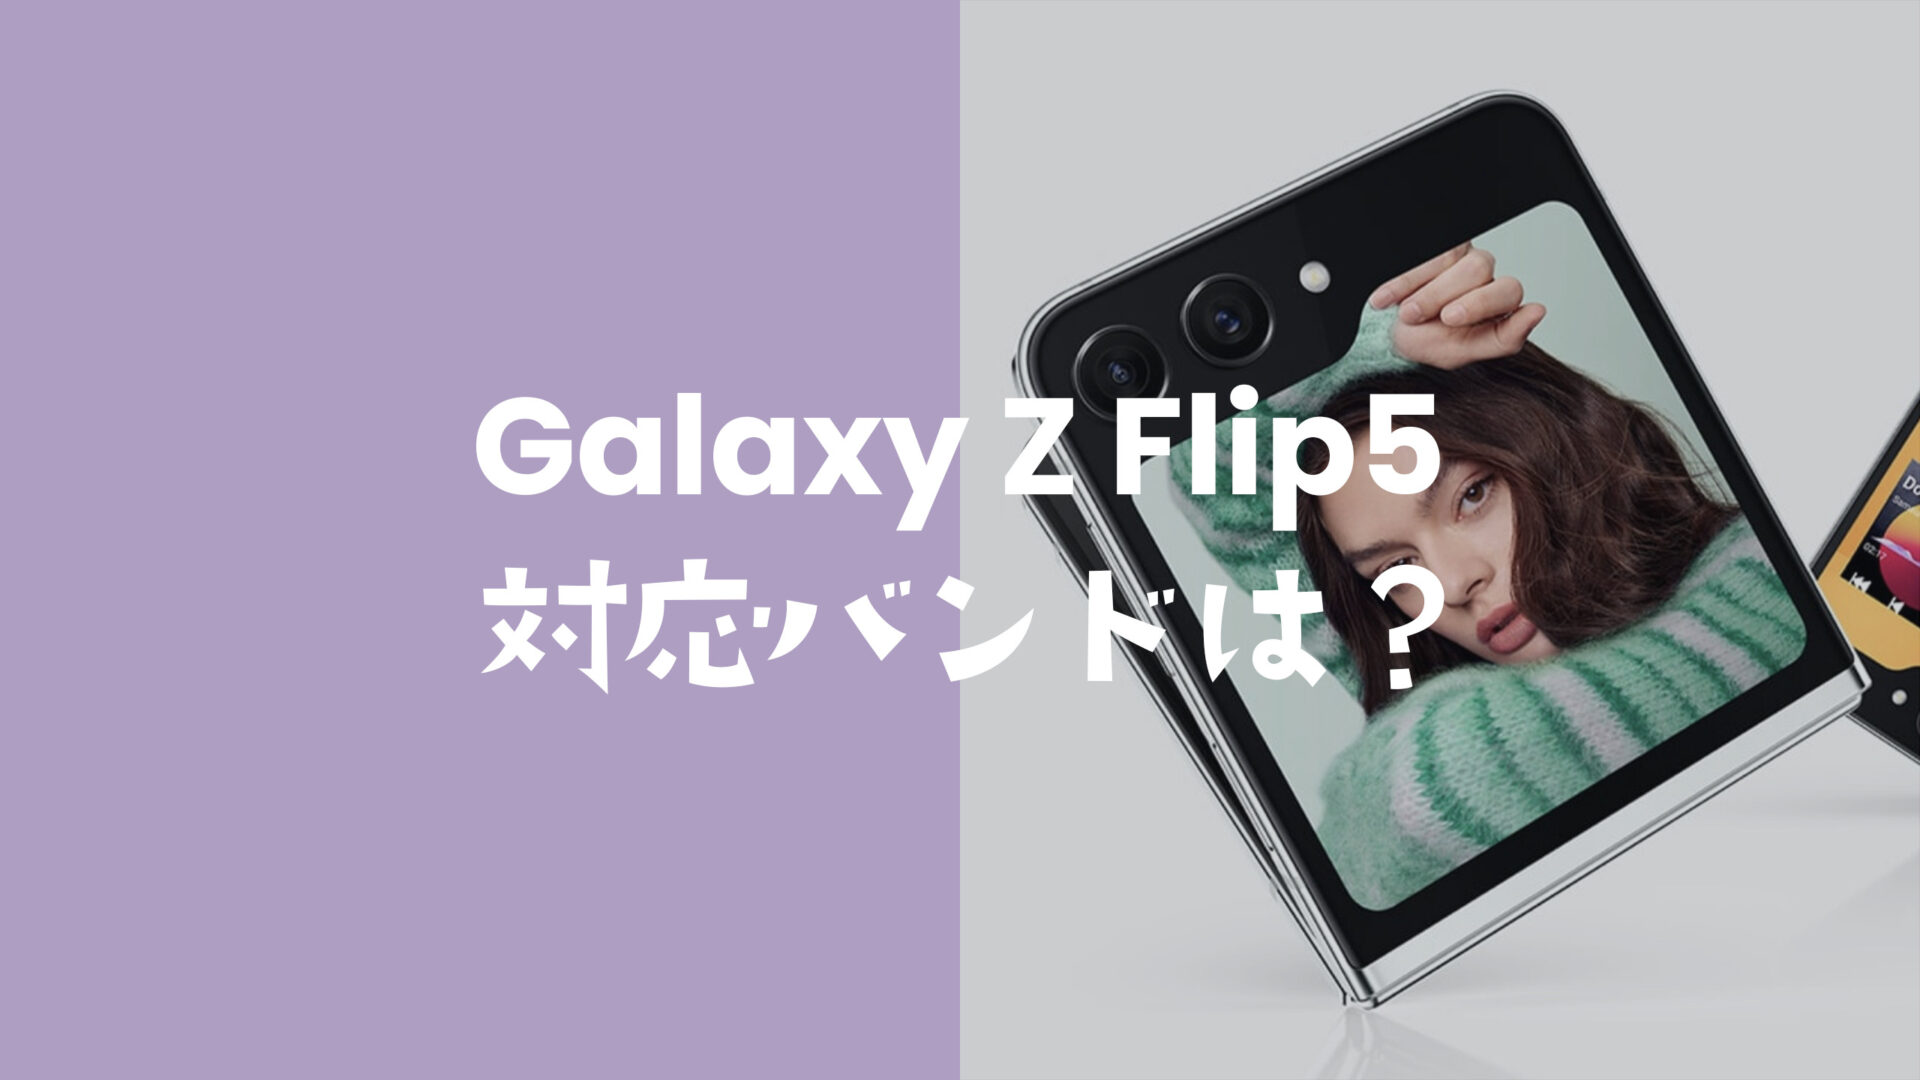 Galaxy Z Flip5の対応バンド(周波数帯)は？ドコモ版とau版は同一？のサムネイル画像